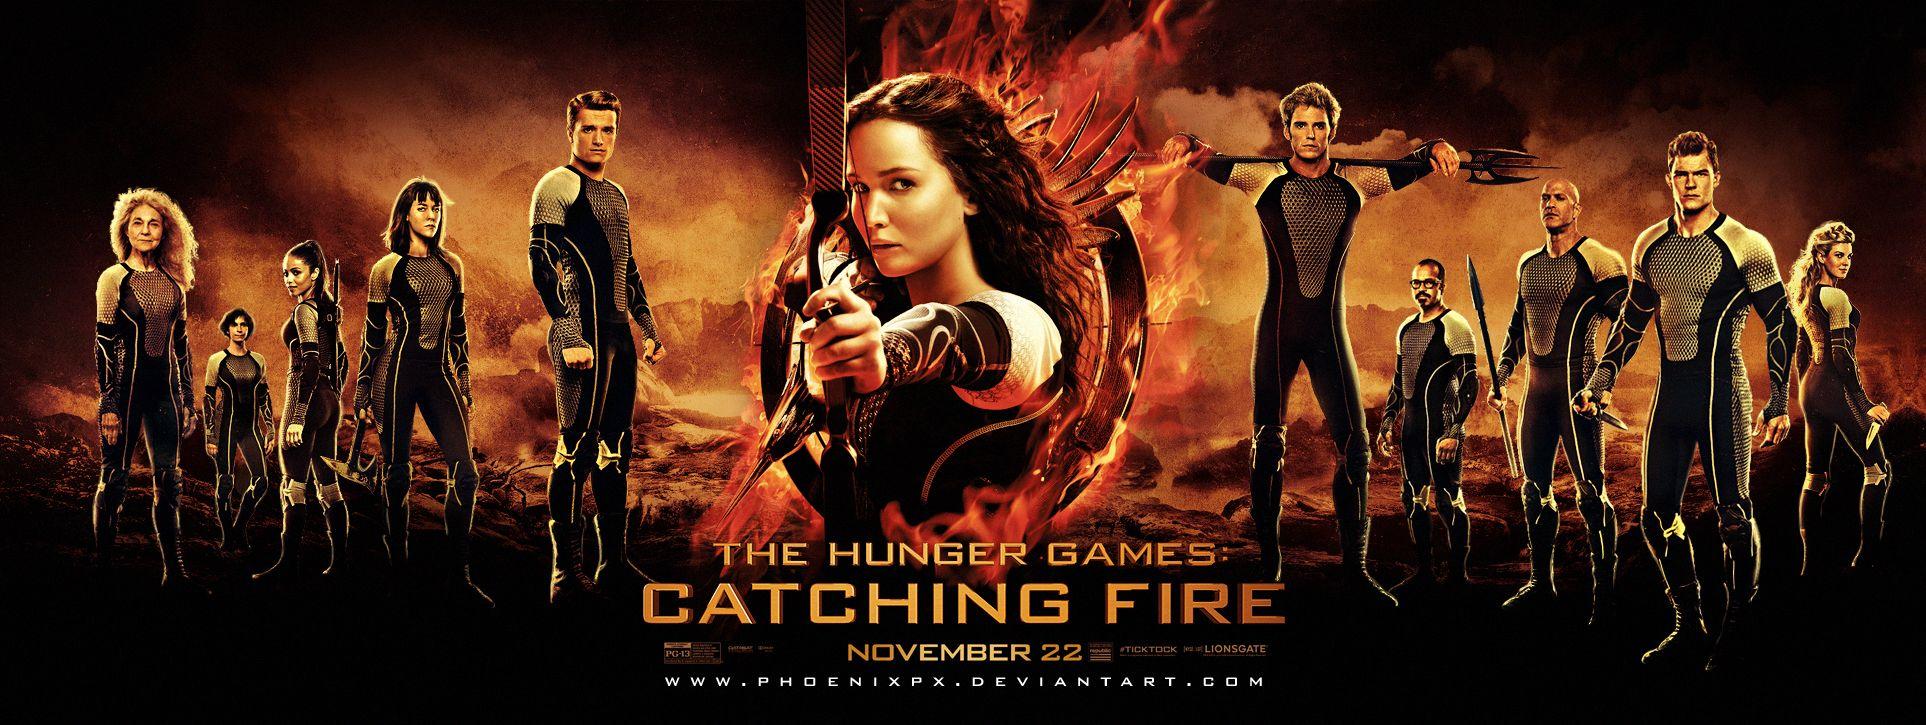 Movie The Hunger Games: Catching Fire wallpaper Desktop, Phone